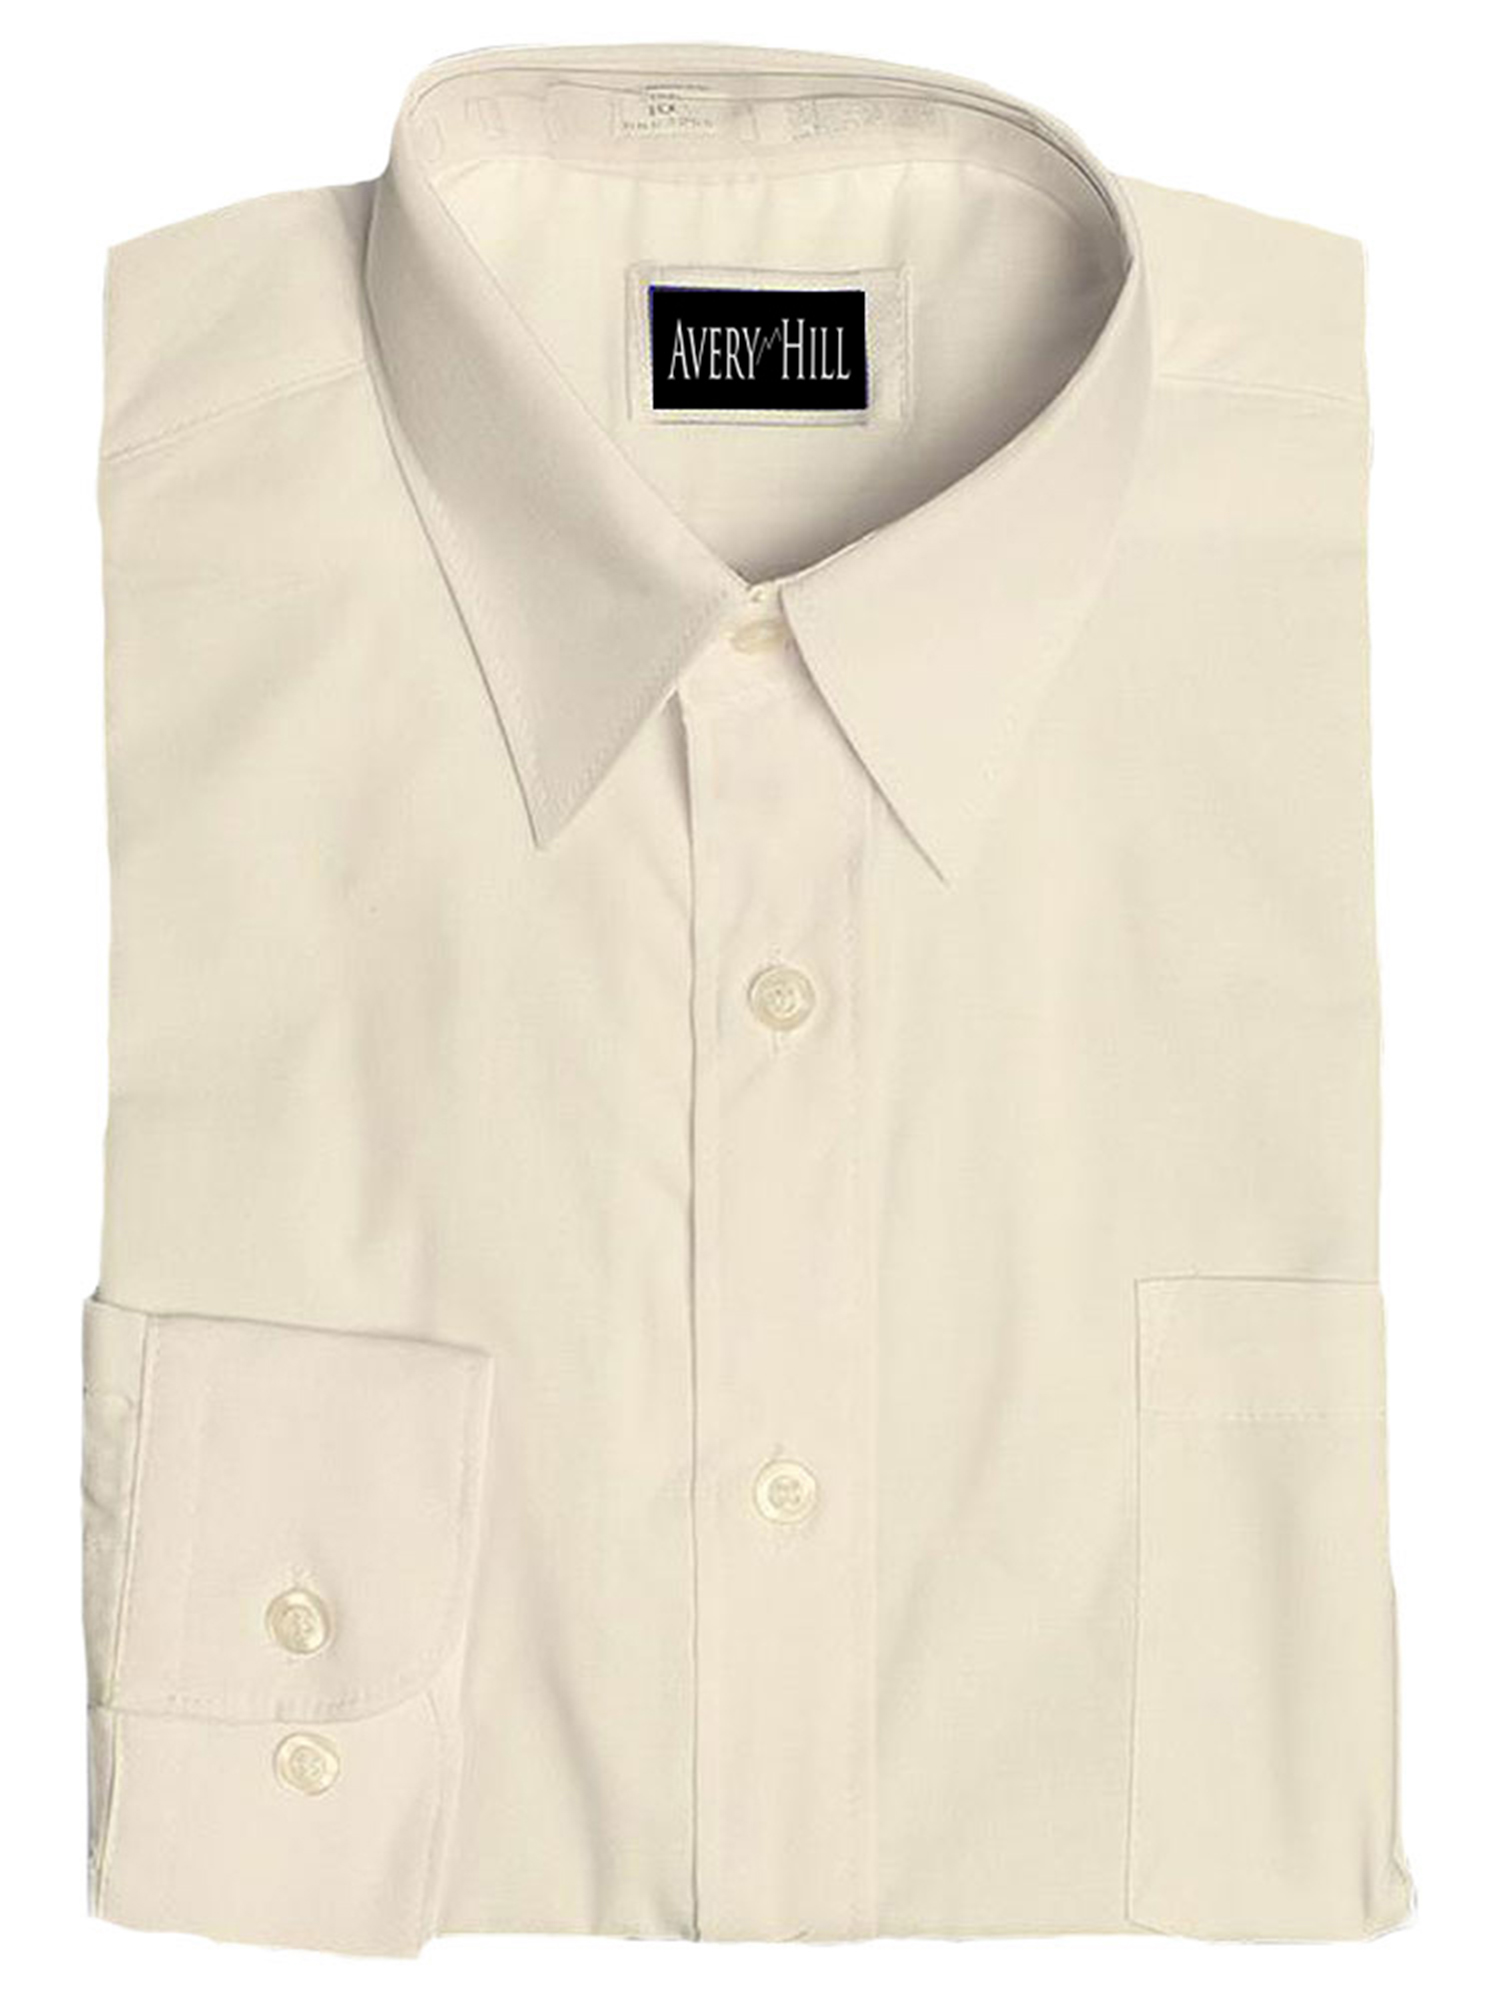 Boys White or Ivory Long Sleeve Wrinkle Resistant Dress Shirt IV 4T